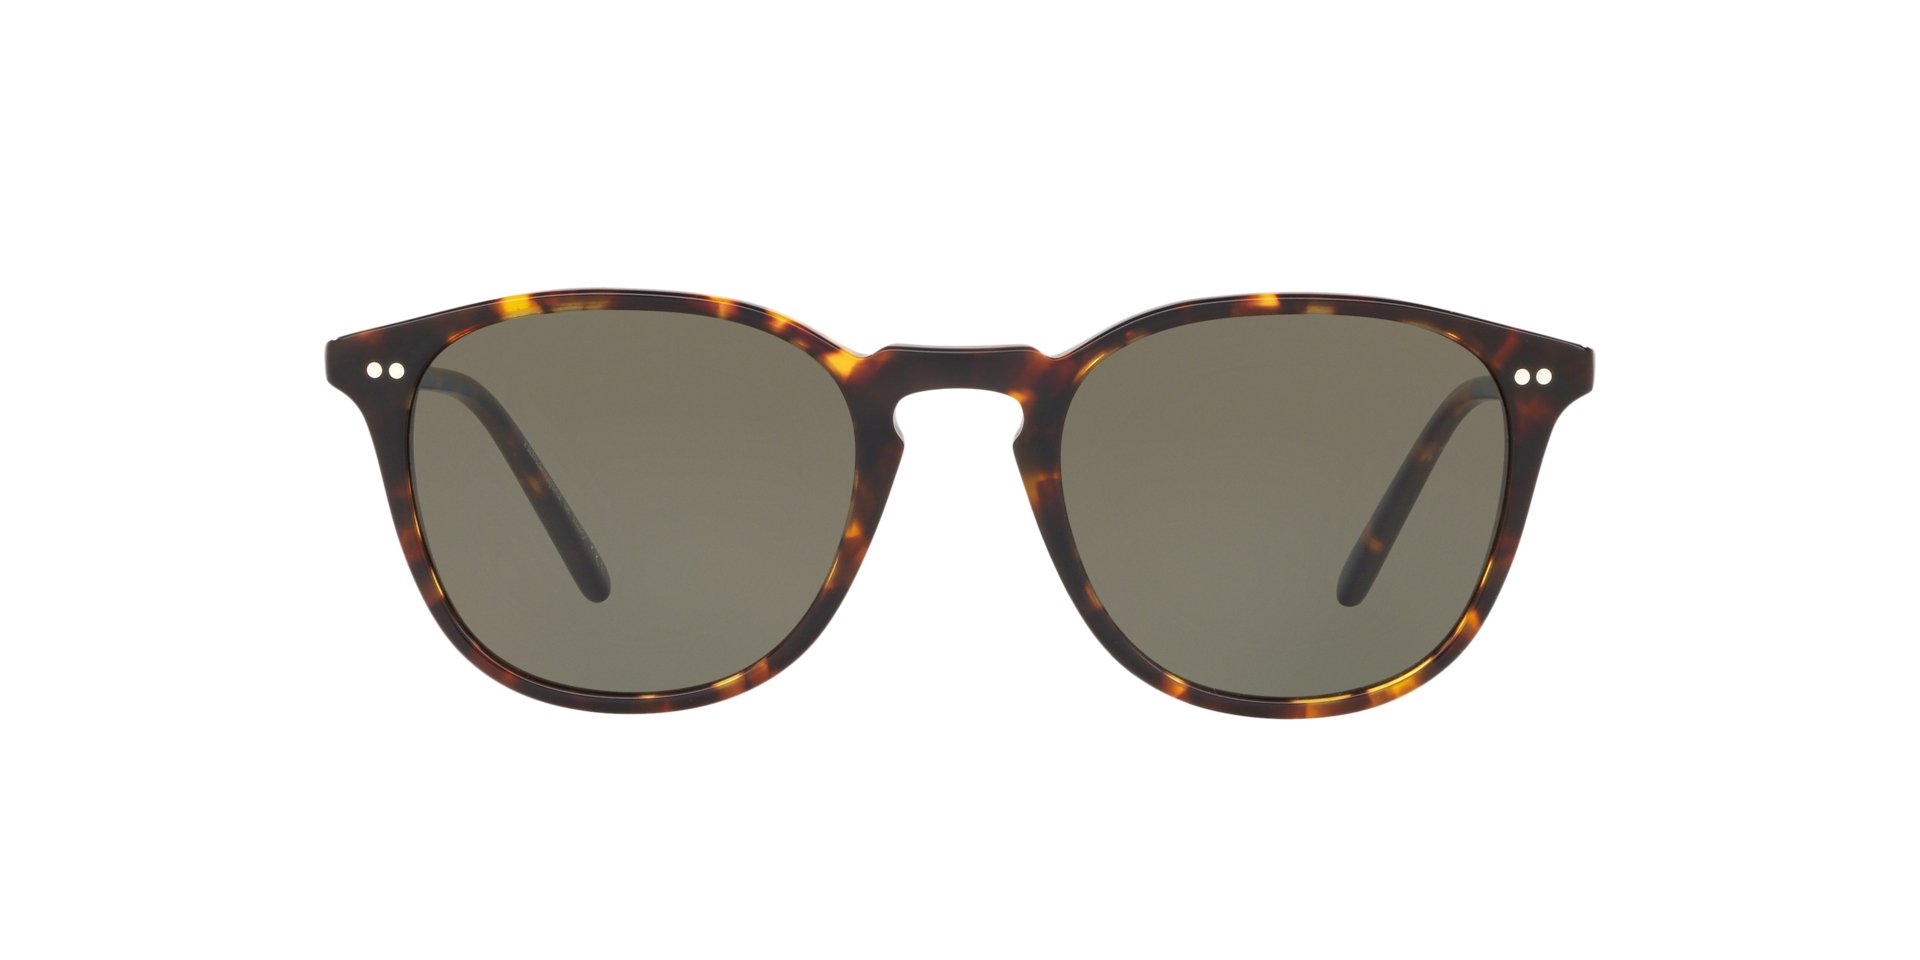 sunglasses photography #sunglasses Oval tortoiseshell-acetate